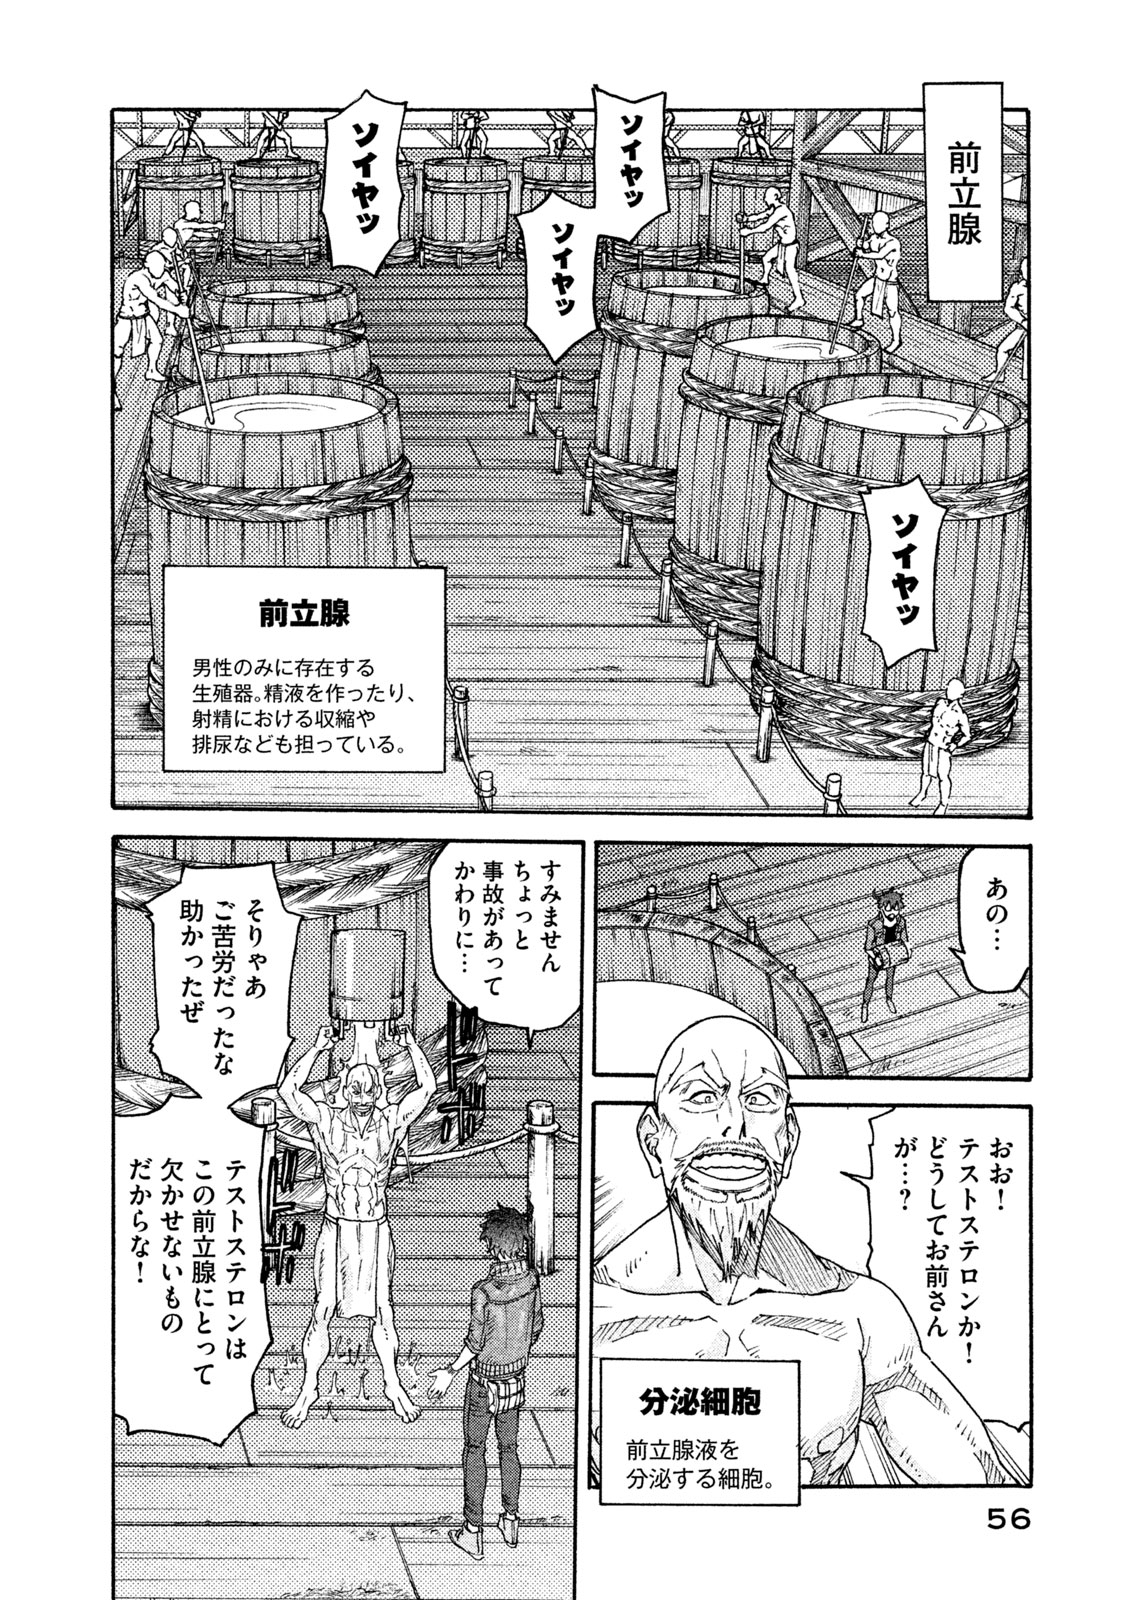 Hataraku Saibou BLACK - Chapter 20 - Page 12